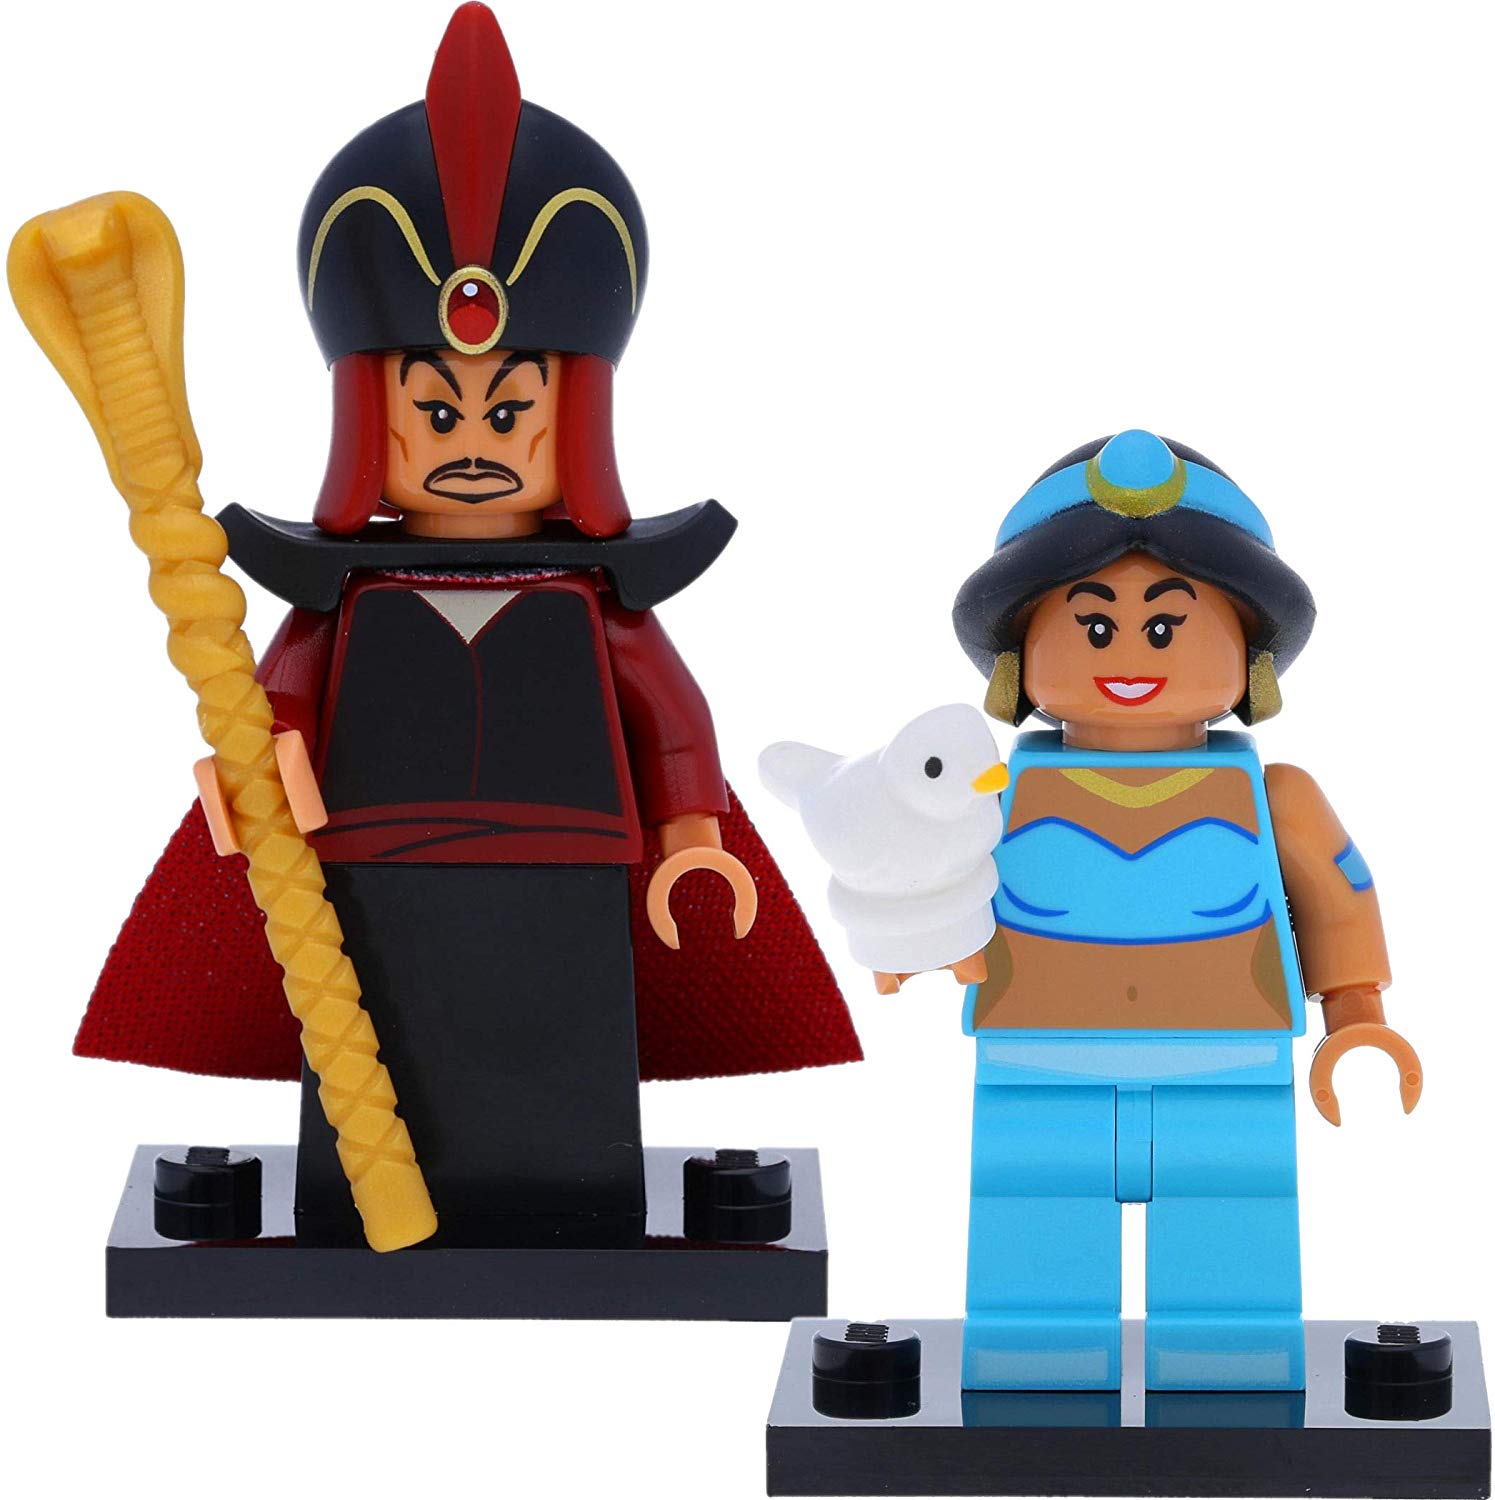 Lego 71024 Disney Series 2 Minifigures: Dschafar, Jafar #11 And Jasmine, Ja